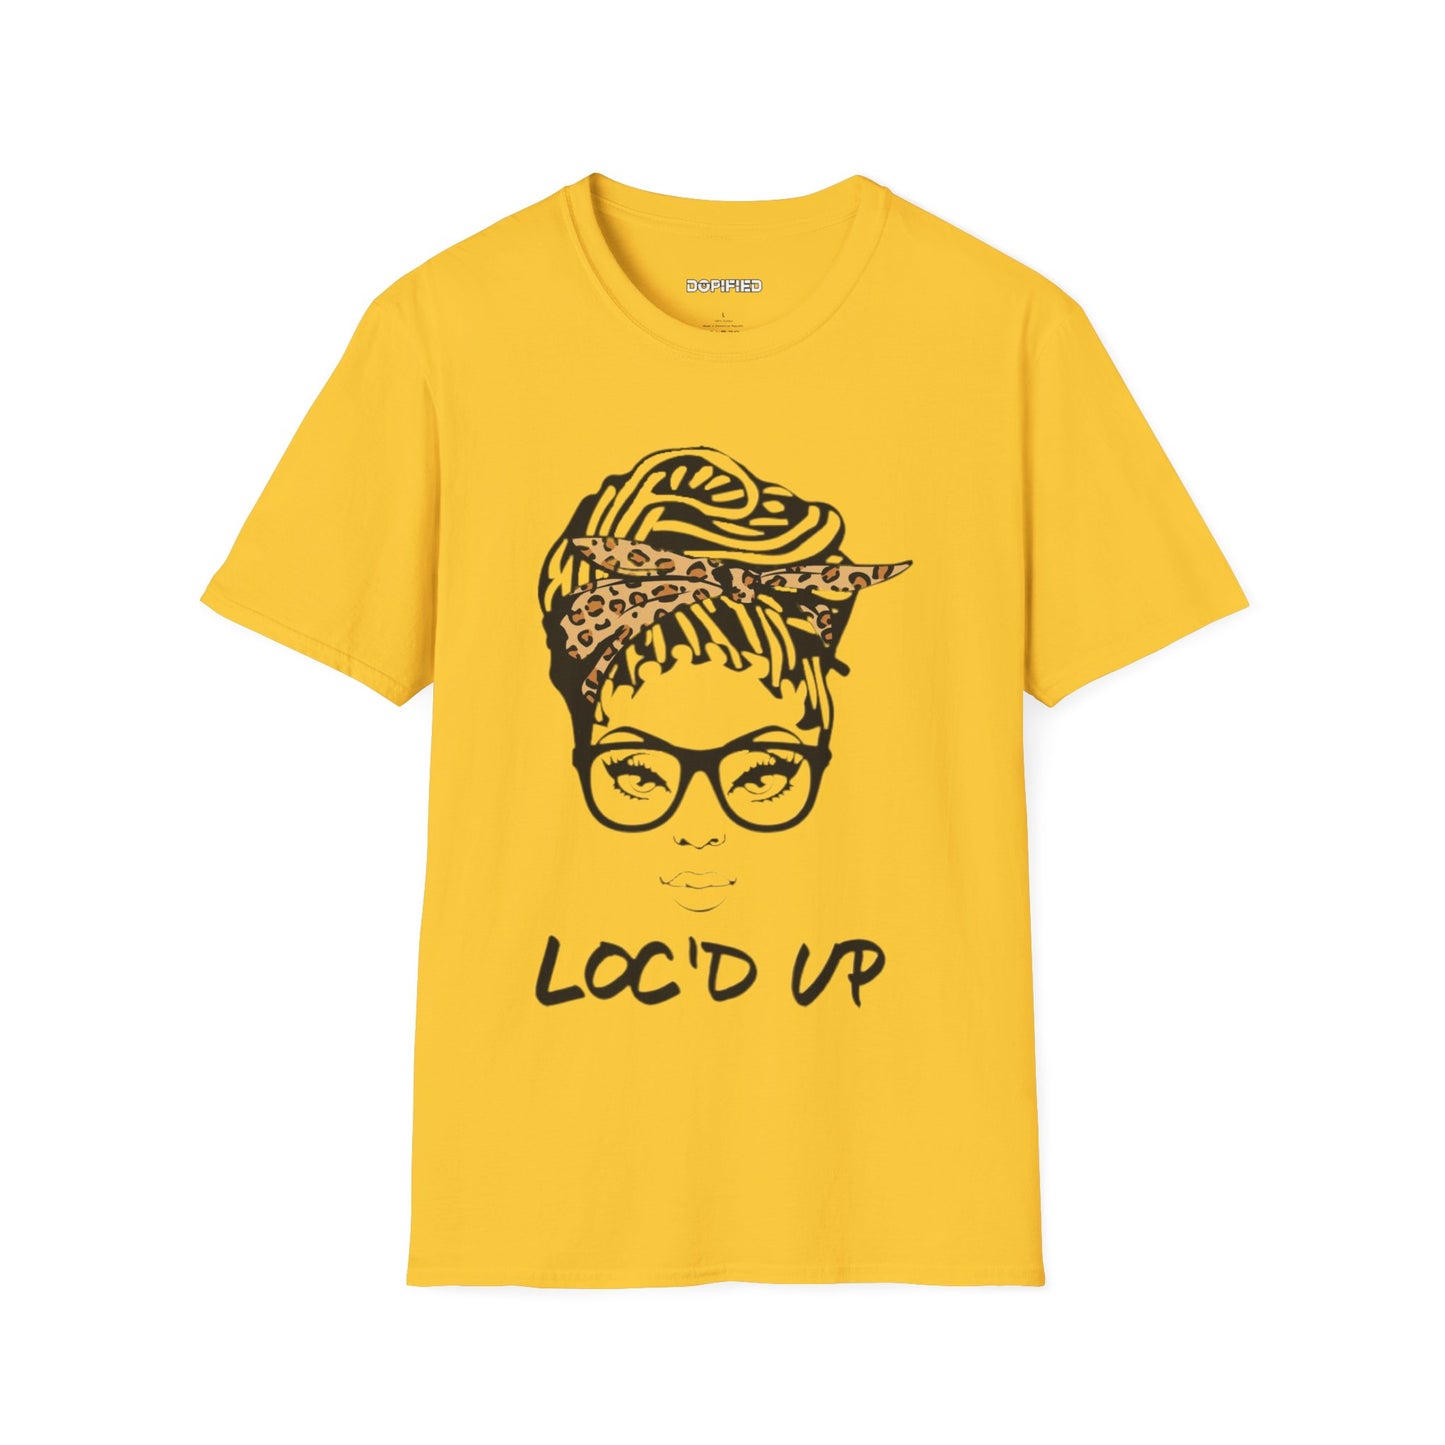 Loc’d Up Females Soft style T-Shirt